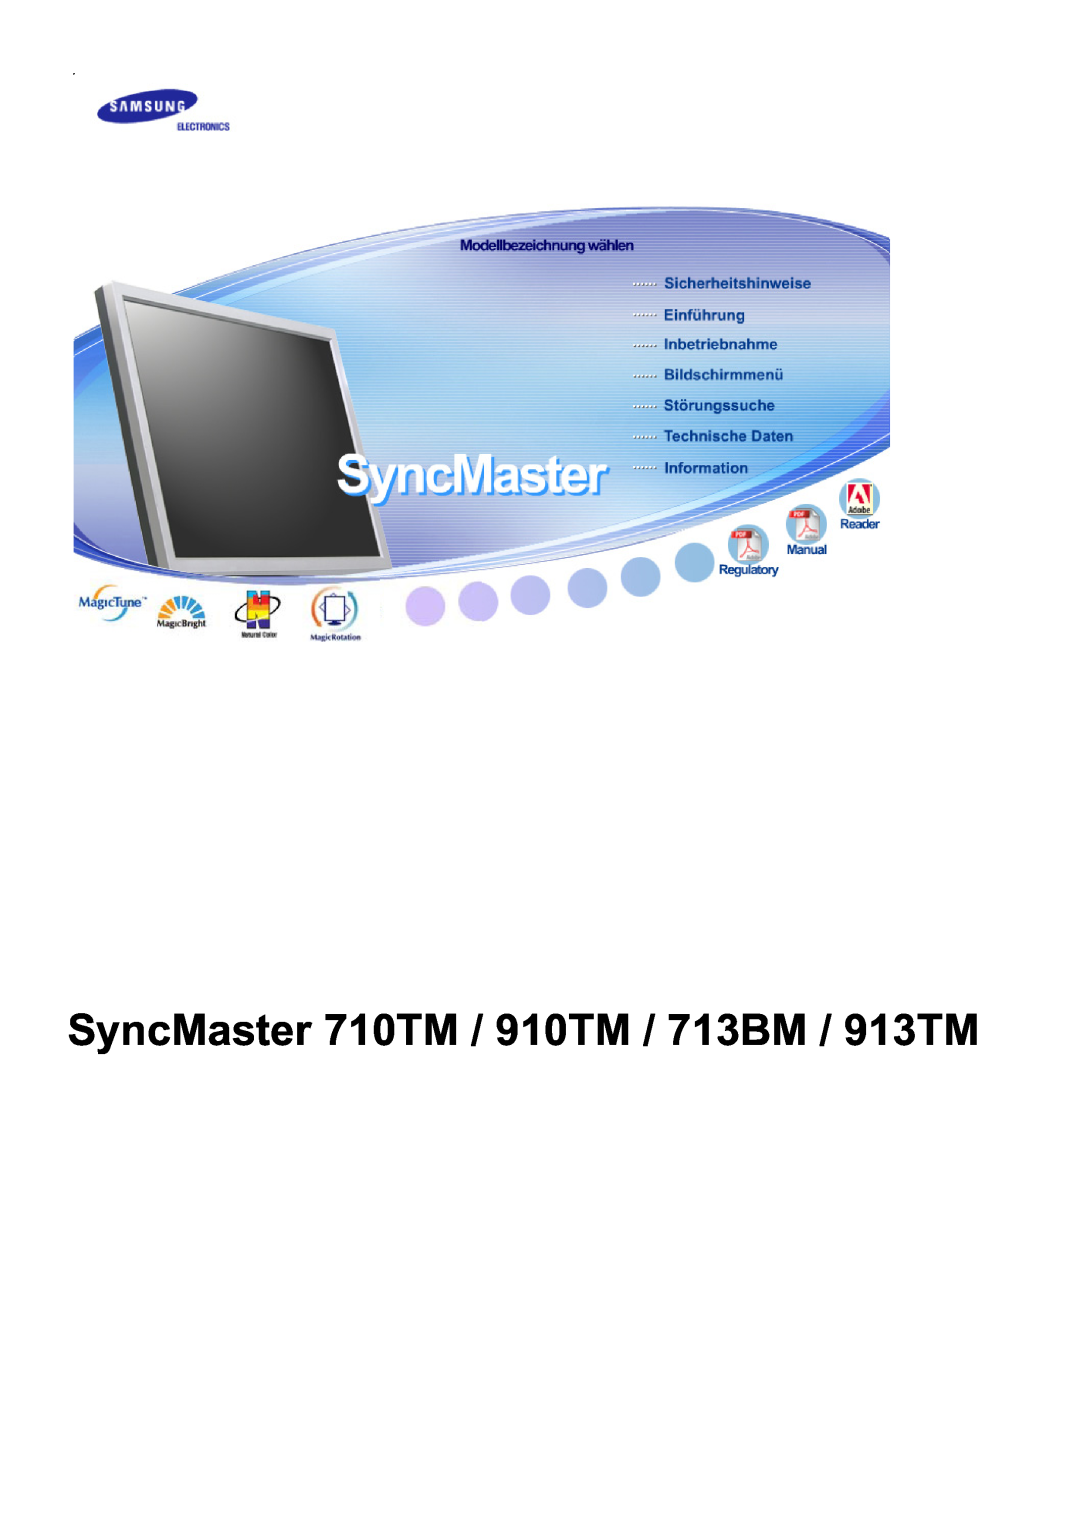 Samsung LS19MJSTS7/EDC manual SyncMaster 710TM / 910TM / 713BM / 913TM, 嘅 嘅 嘅 嘅 嘅 嘅 嘅 嘅 嘅 嘅 嘅 嘅 嘅 